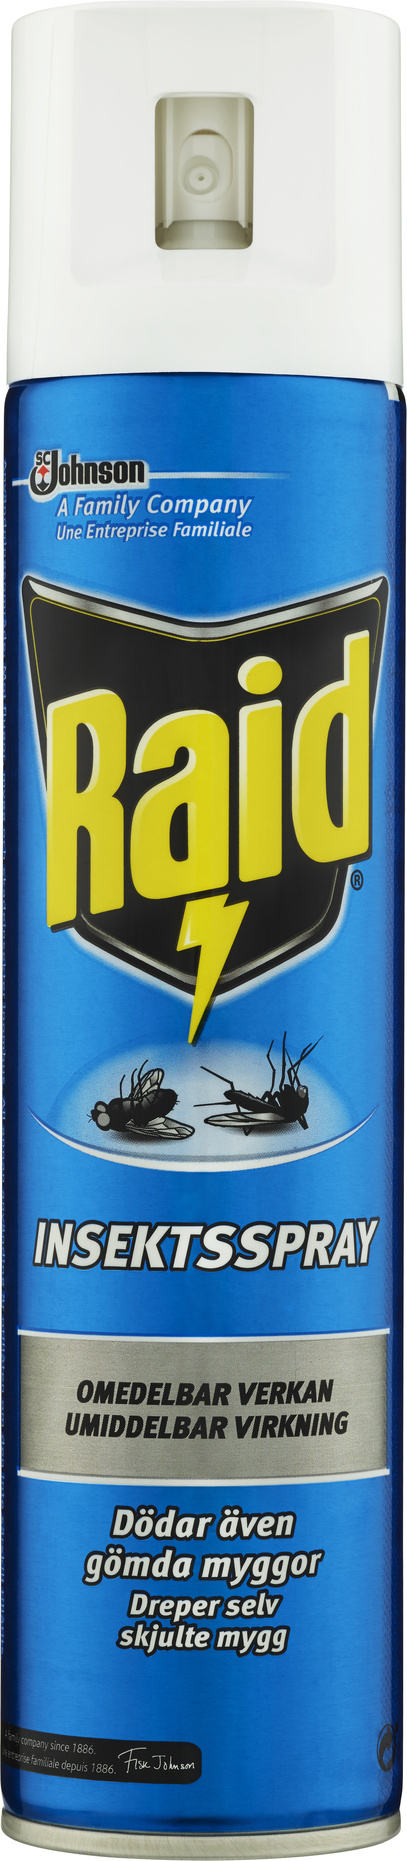 Raid Insektspray 300ml